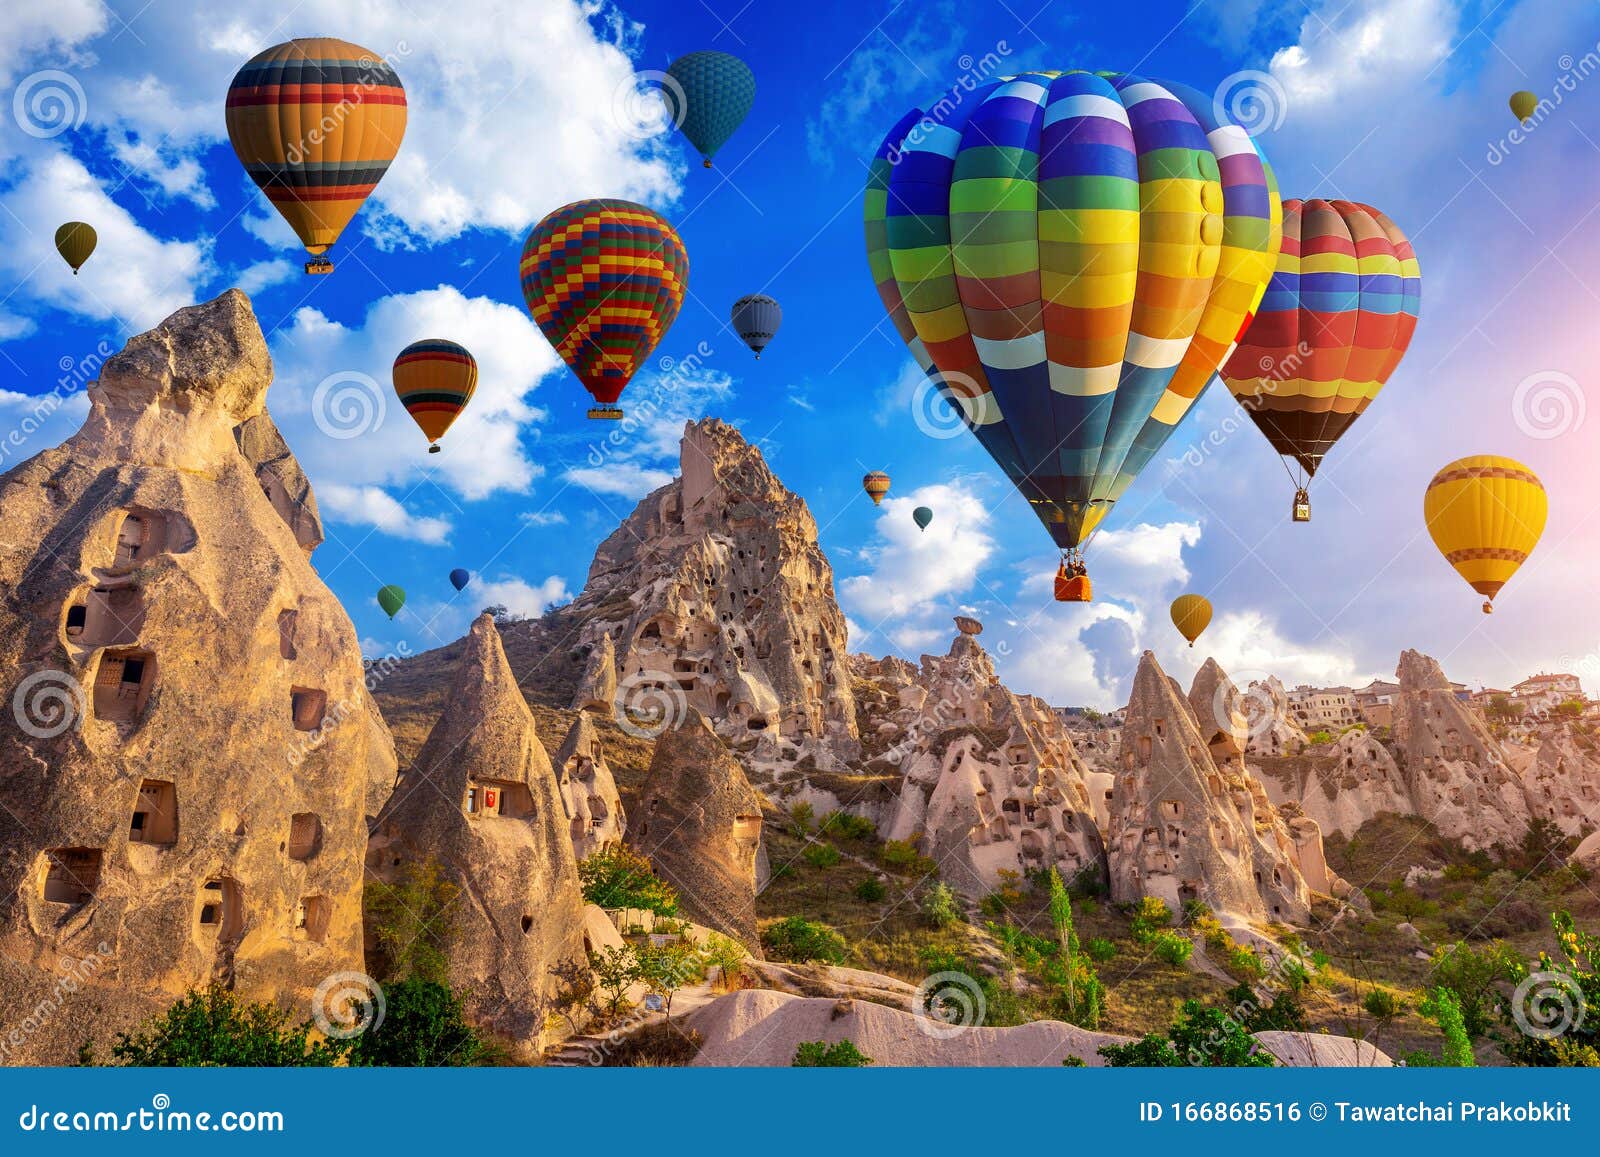 colorful hot air balloon flying over cappadocia, turkey.